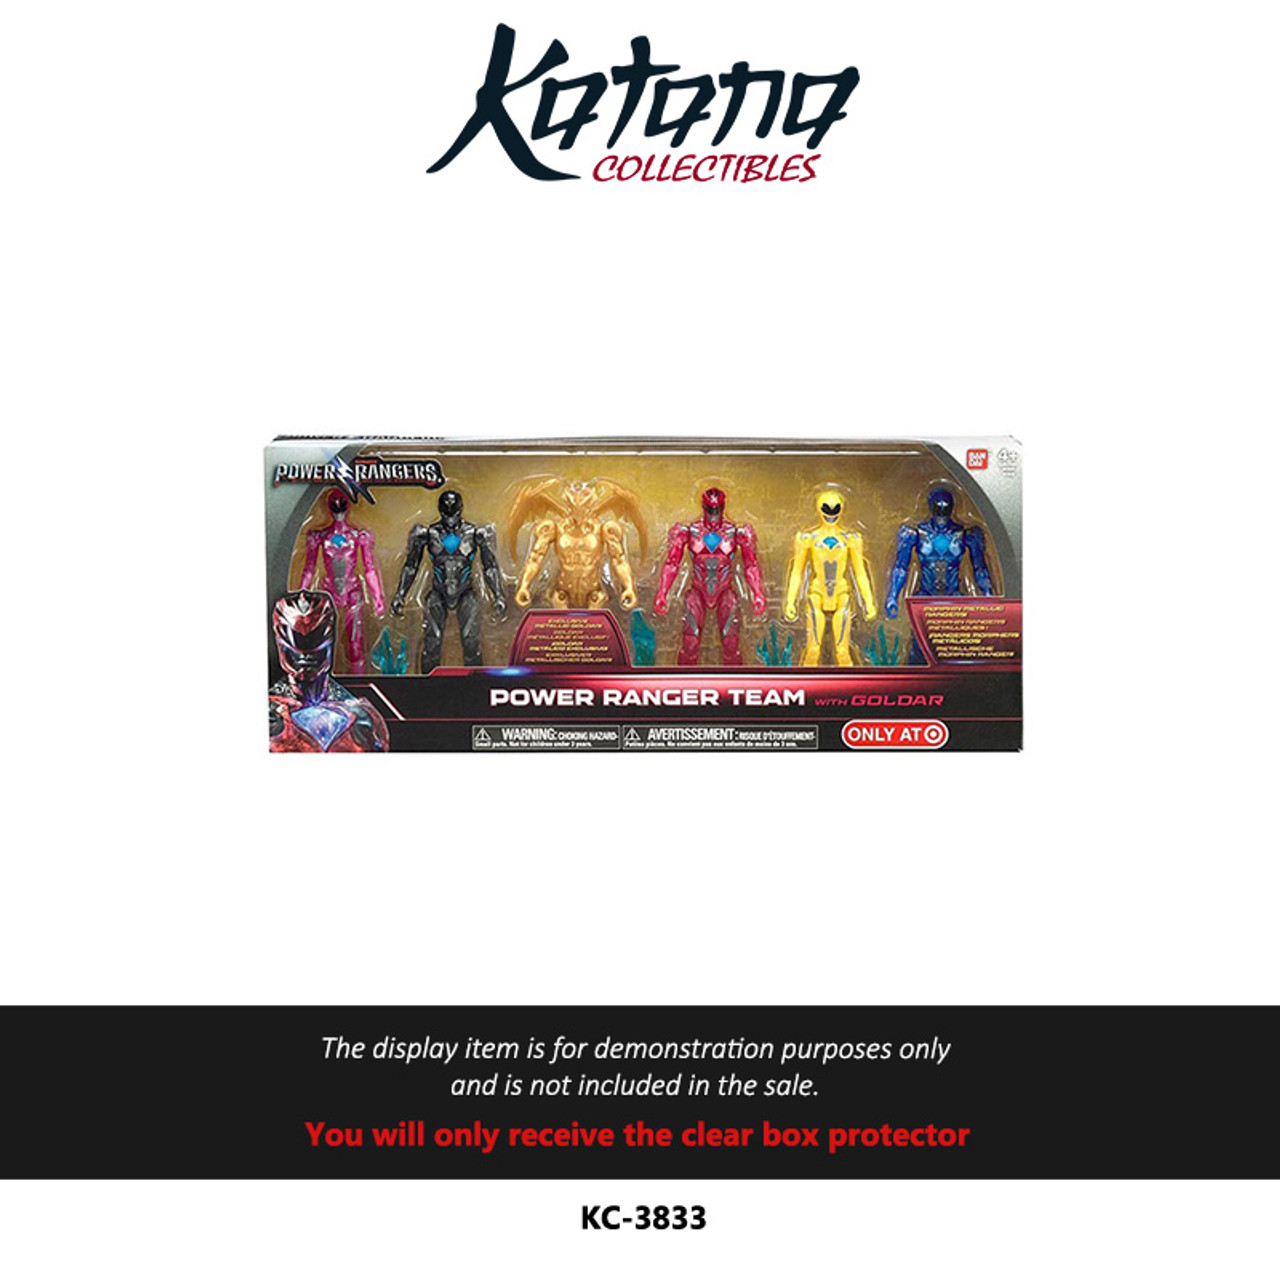 Katana Collectibles Protector For Power Ranger Team Box Set with Figures